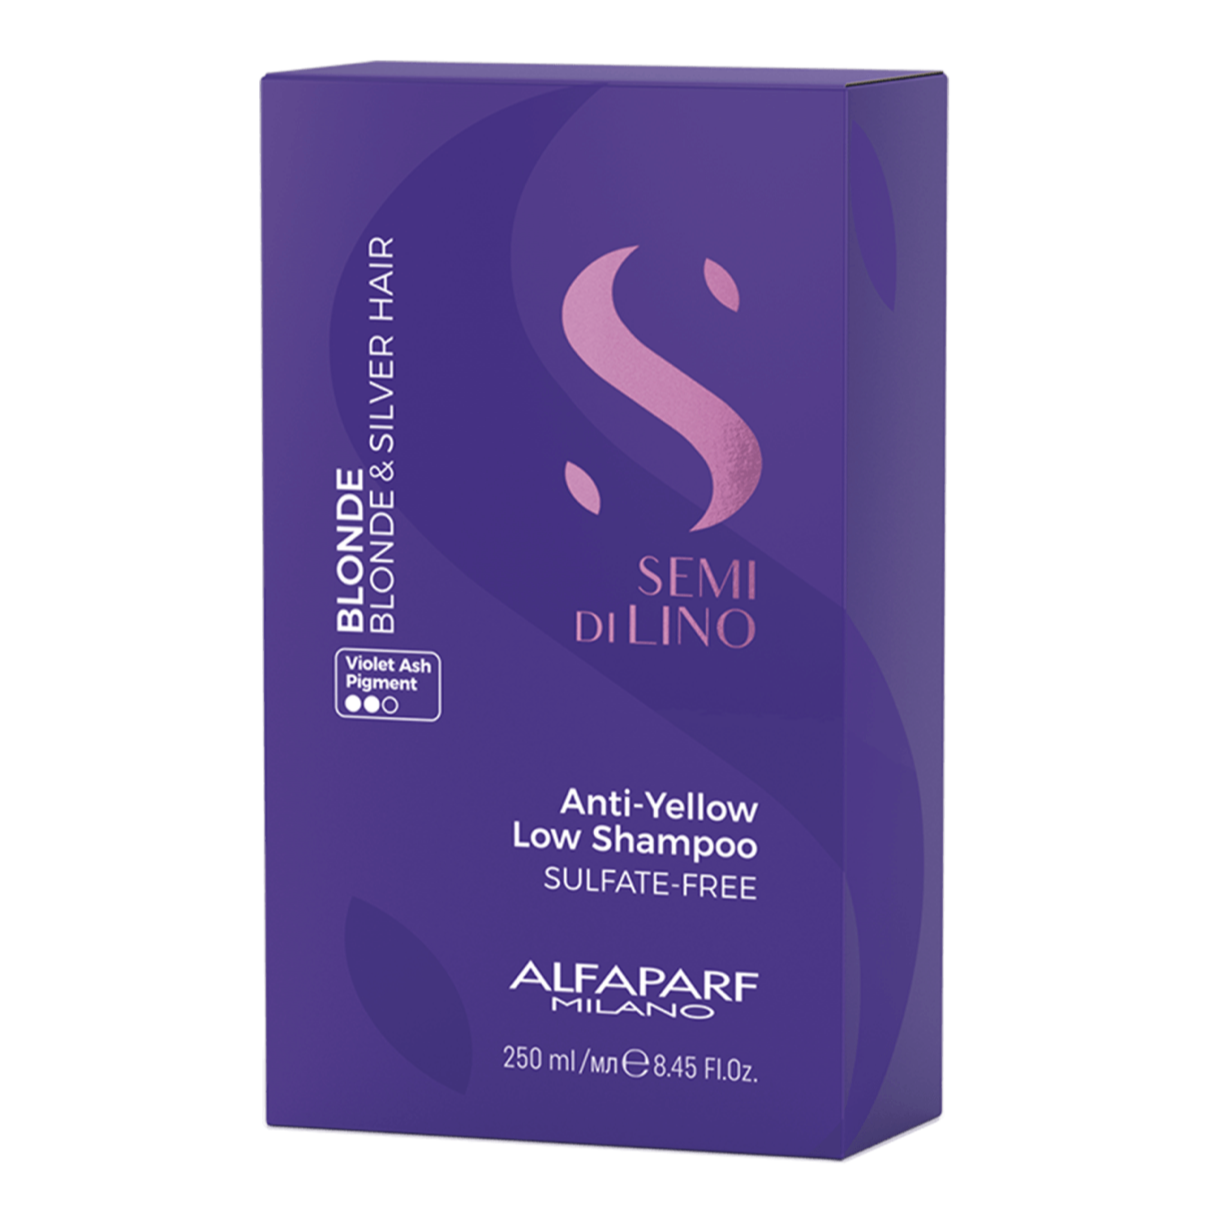 ALFAPARF MILANO Semi Di Lino Blonde Anti-Yellow Low Shampoo, packaging